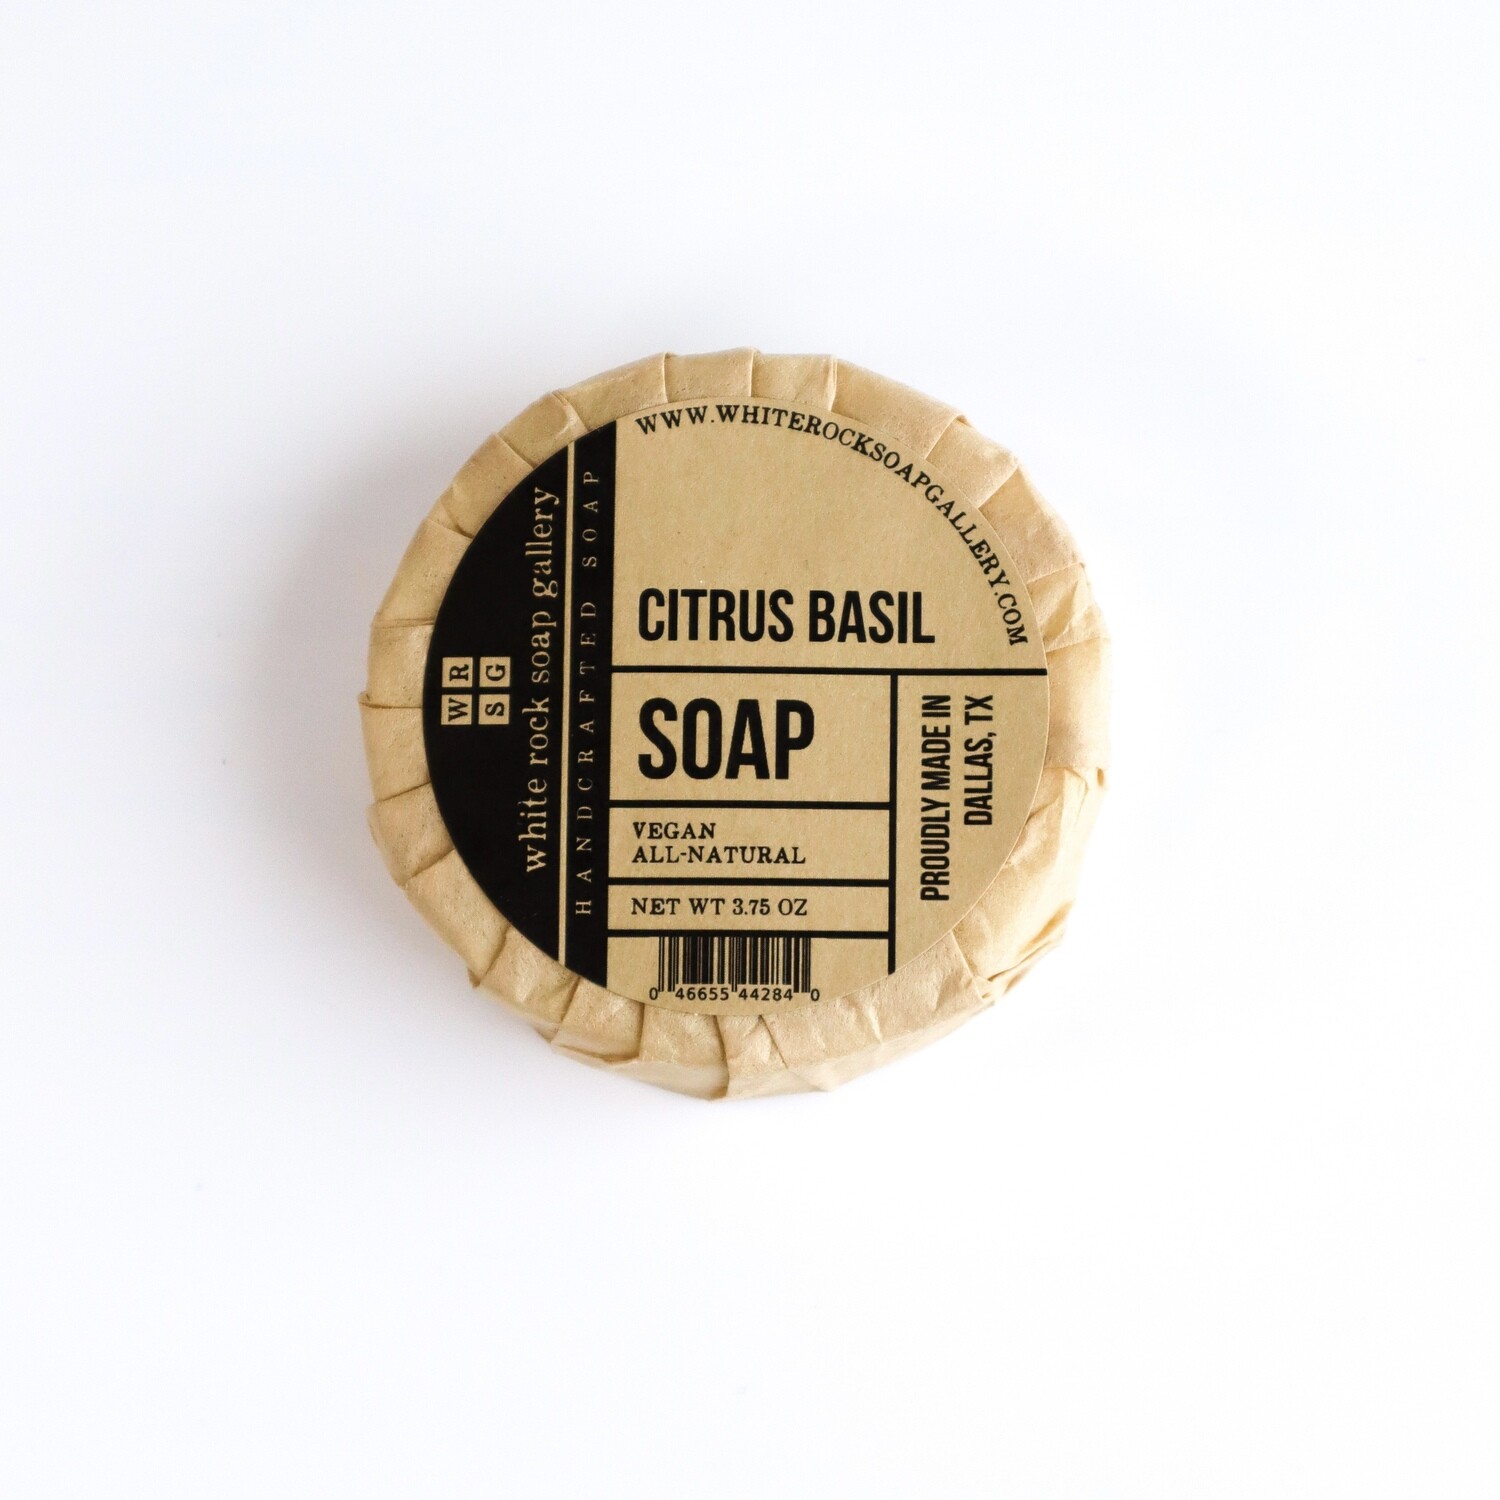 Citrus Basil Soap